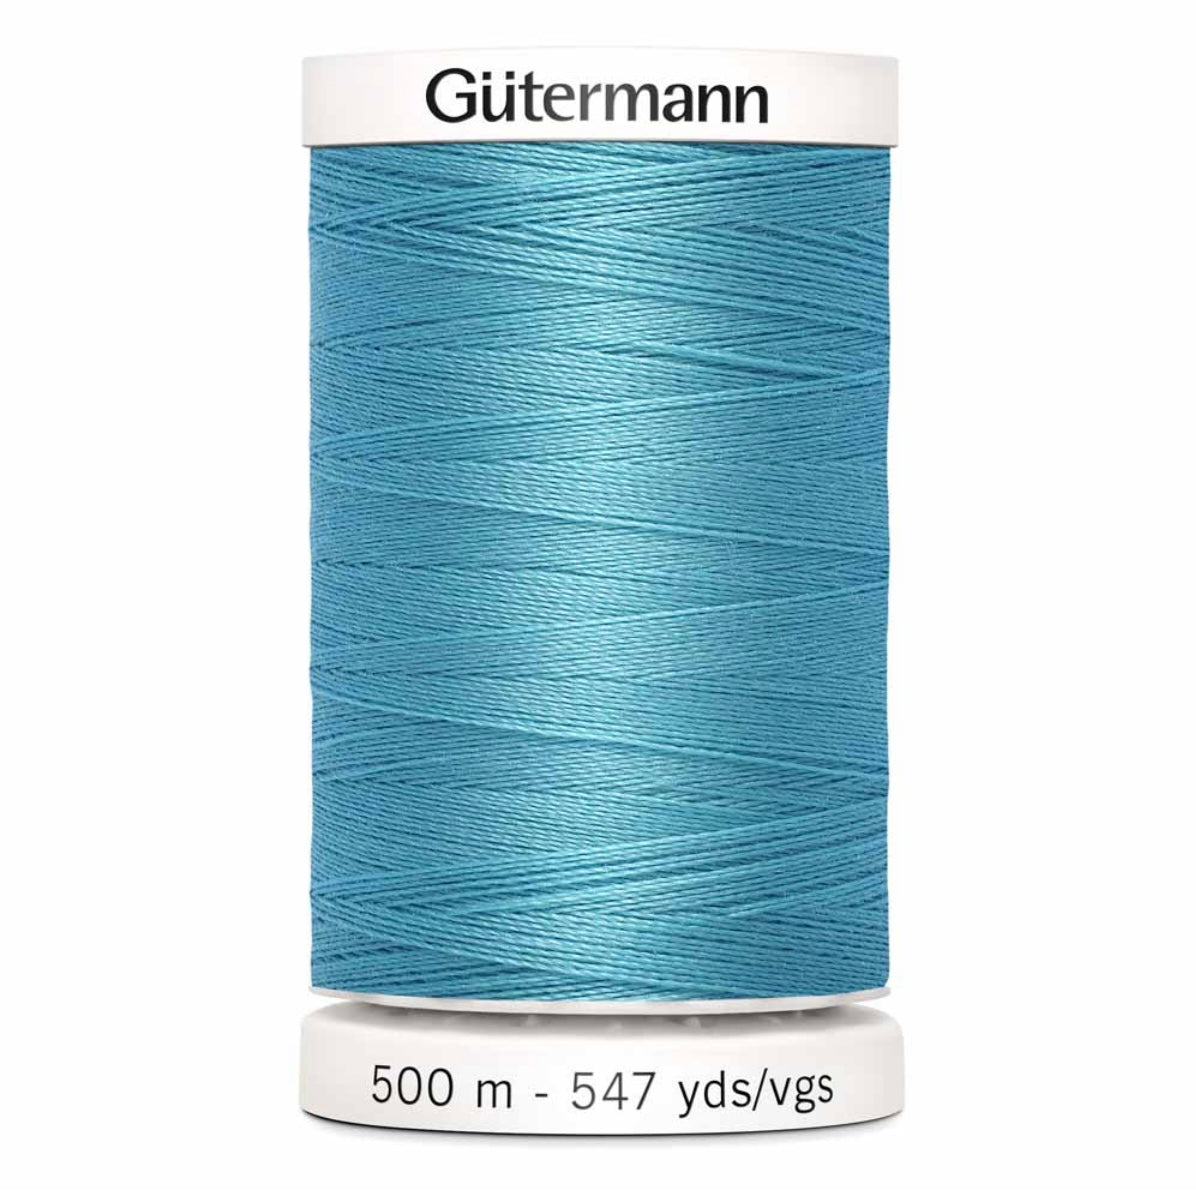 Sew-All Polyester Thread - Gütermann - Col. 610 / Mystic Blue